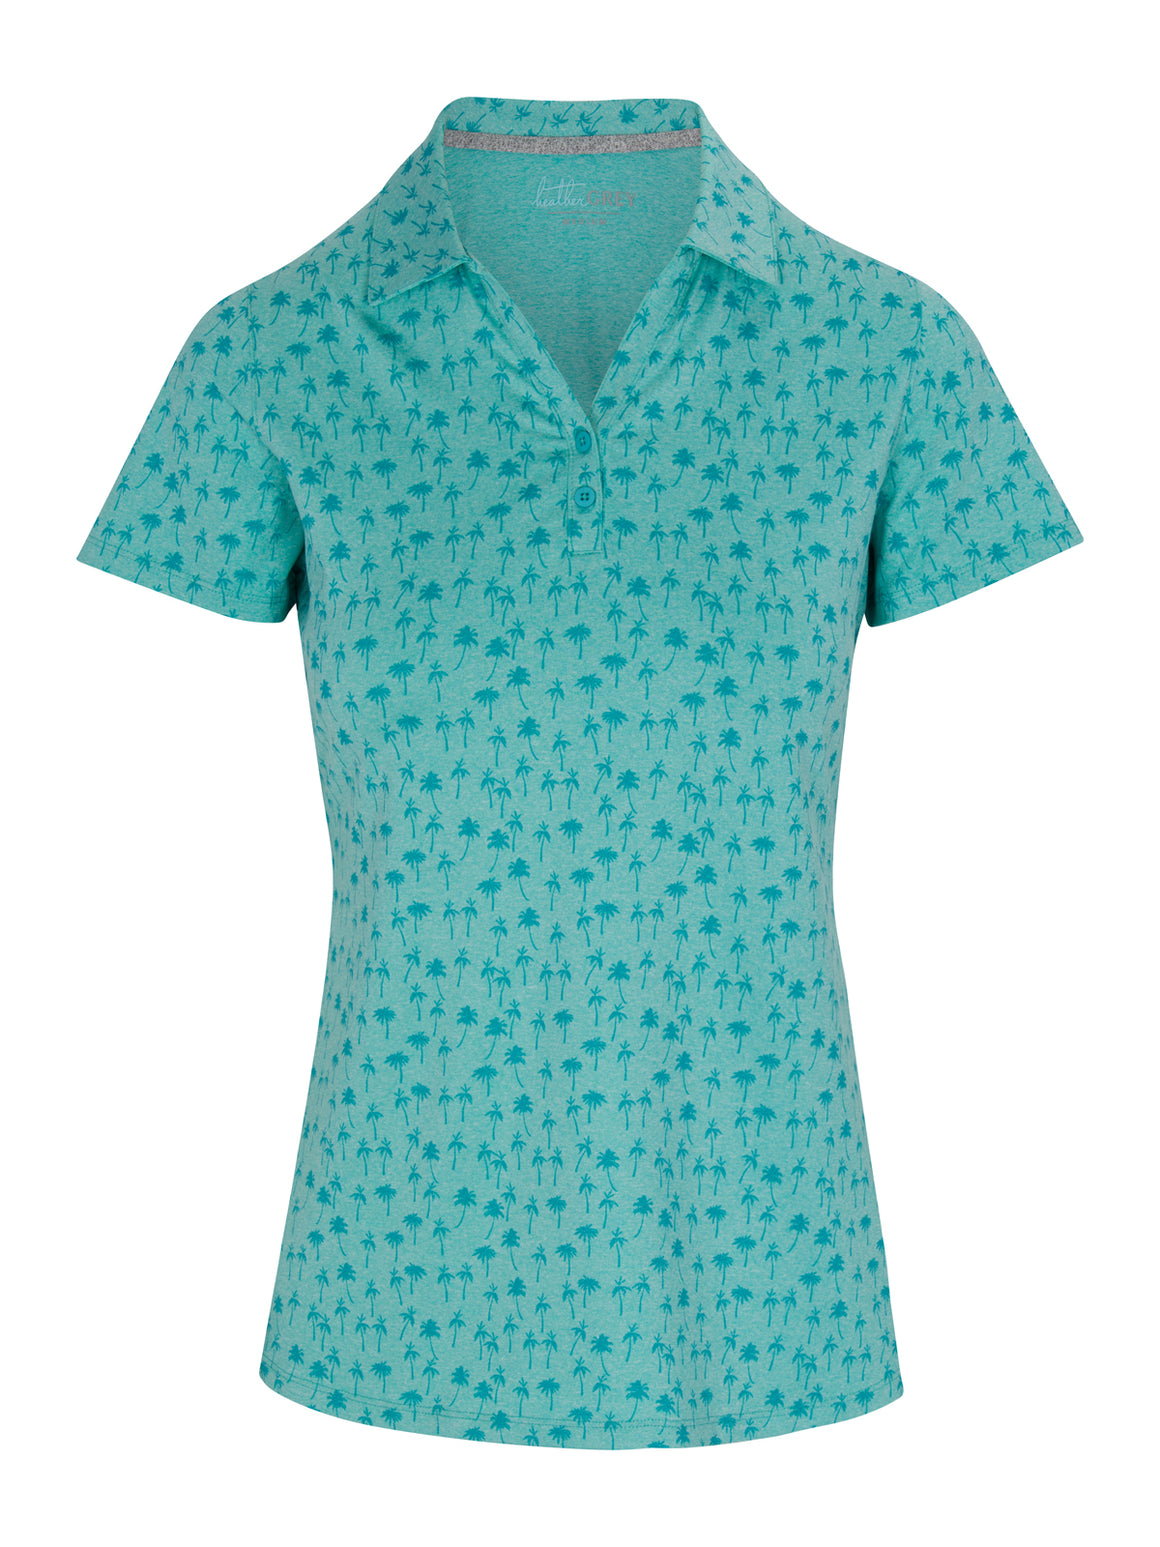 New Lifeline Women's Poloshirt (Heather Gray) For Sale - Lifeline Shirts